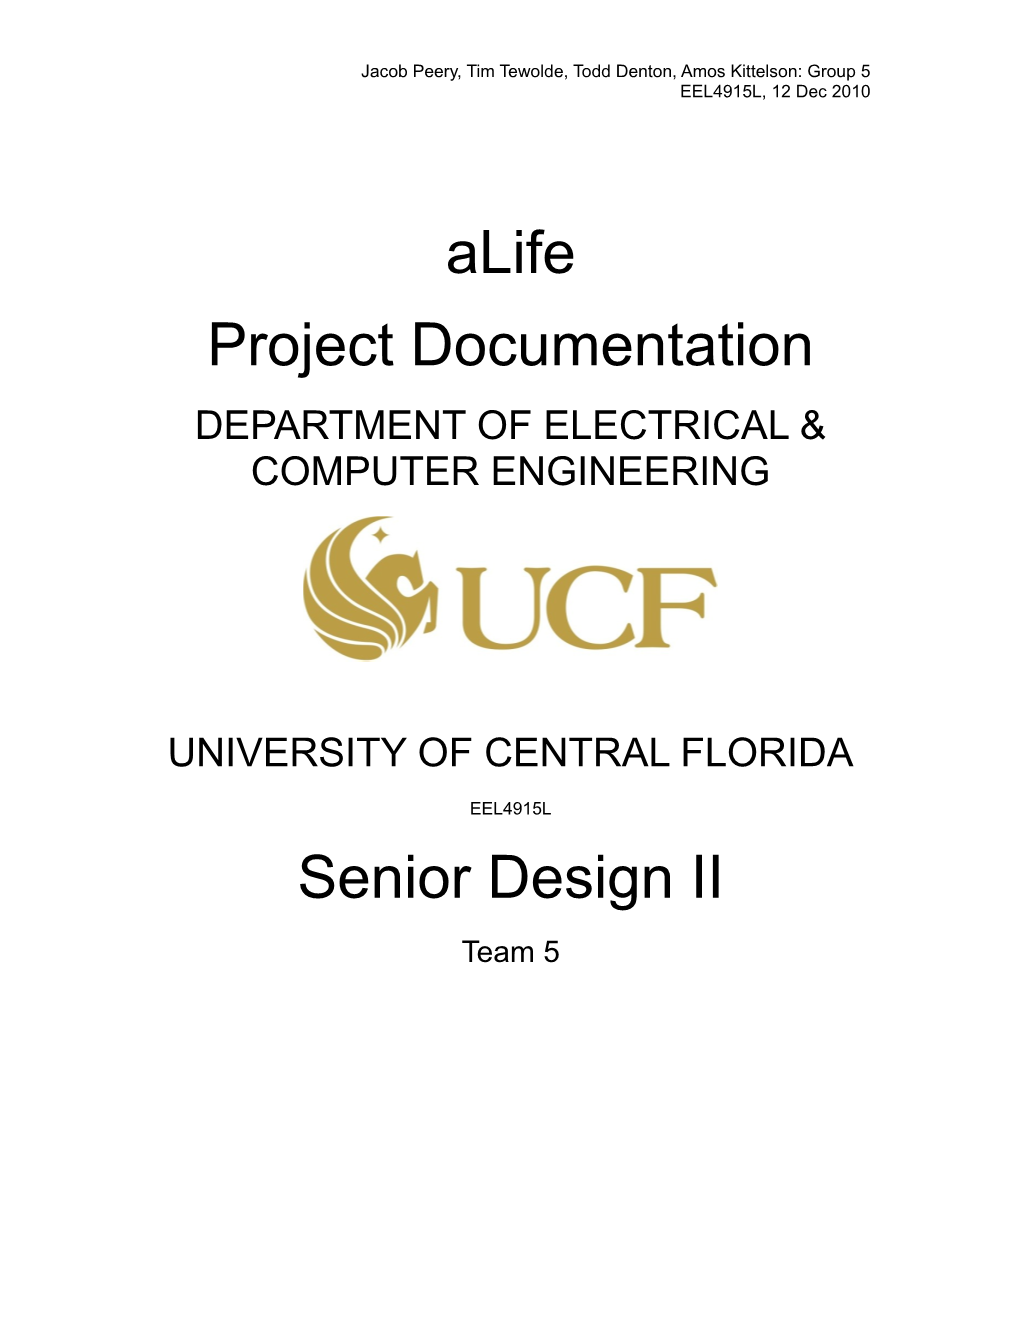 Alife Project Documentation Senior Design II